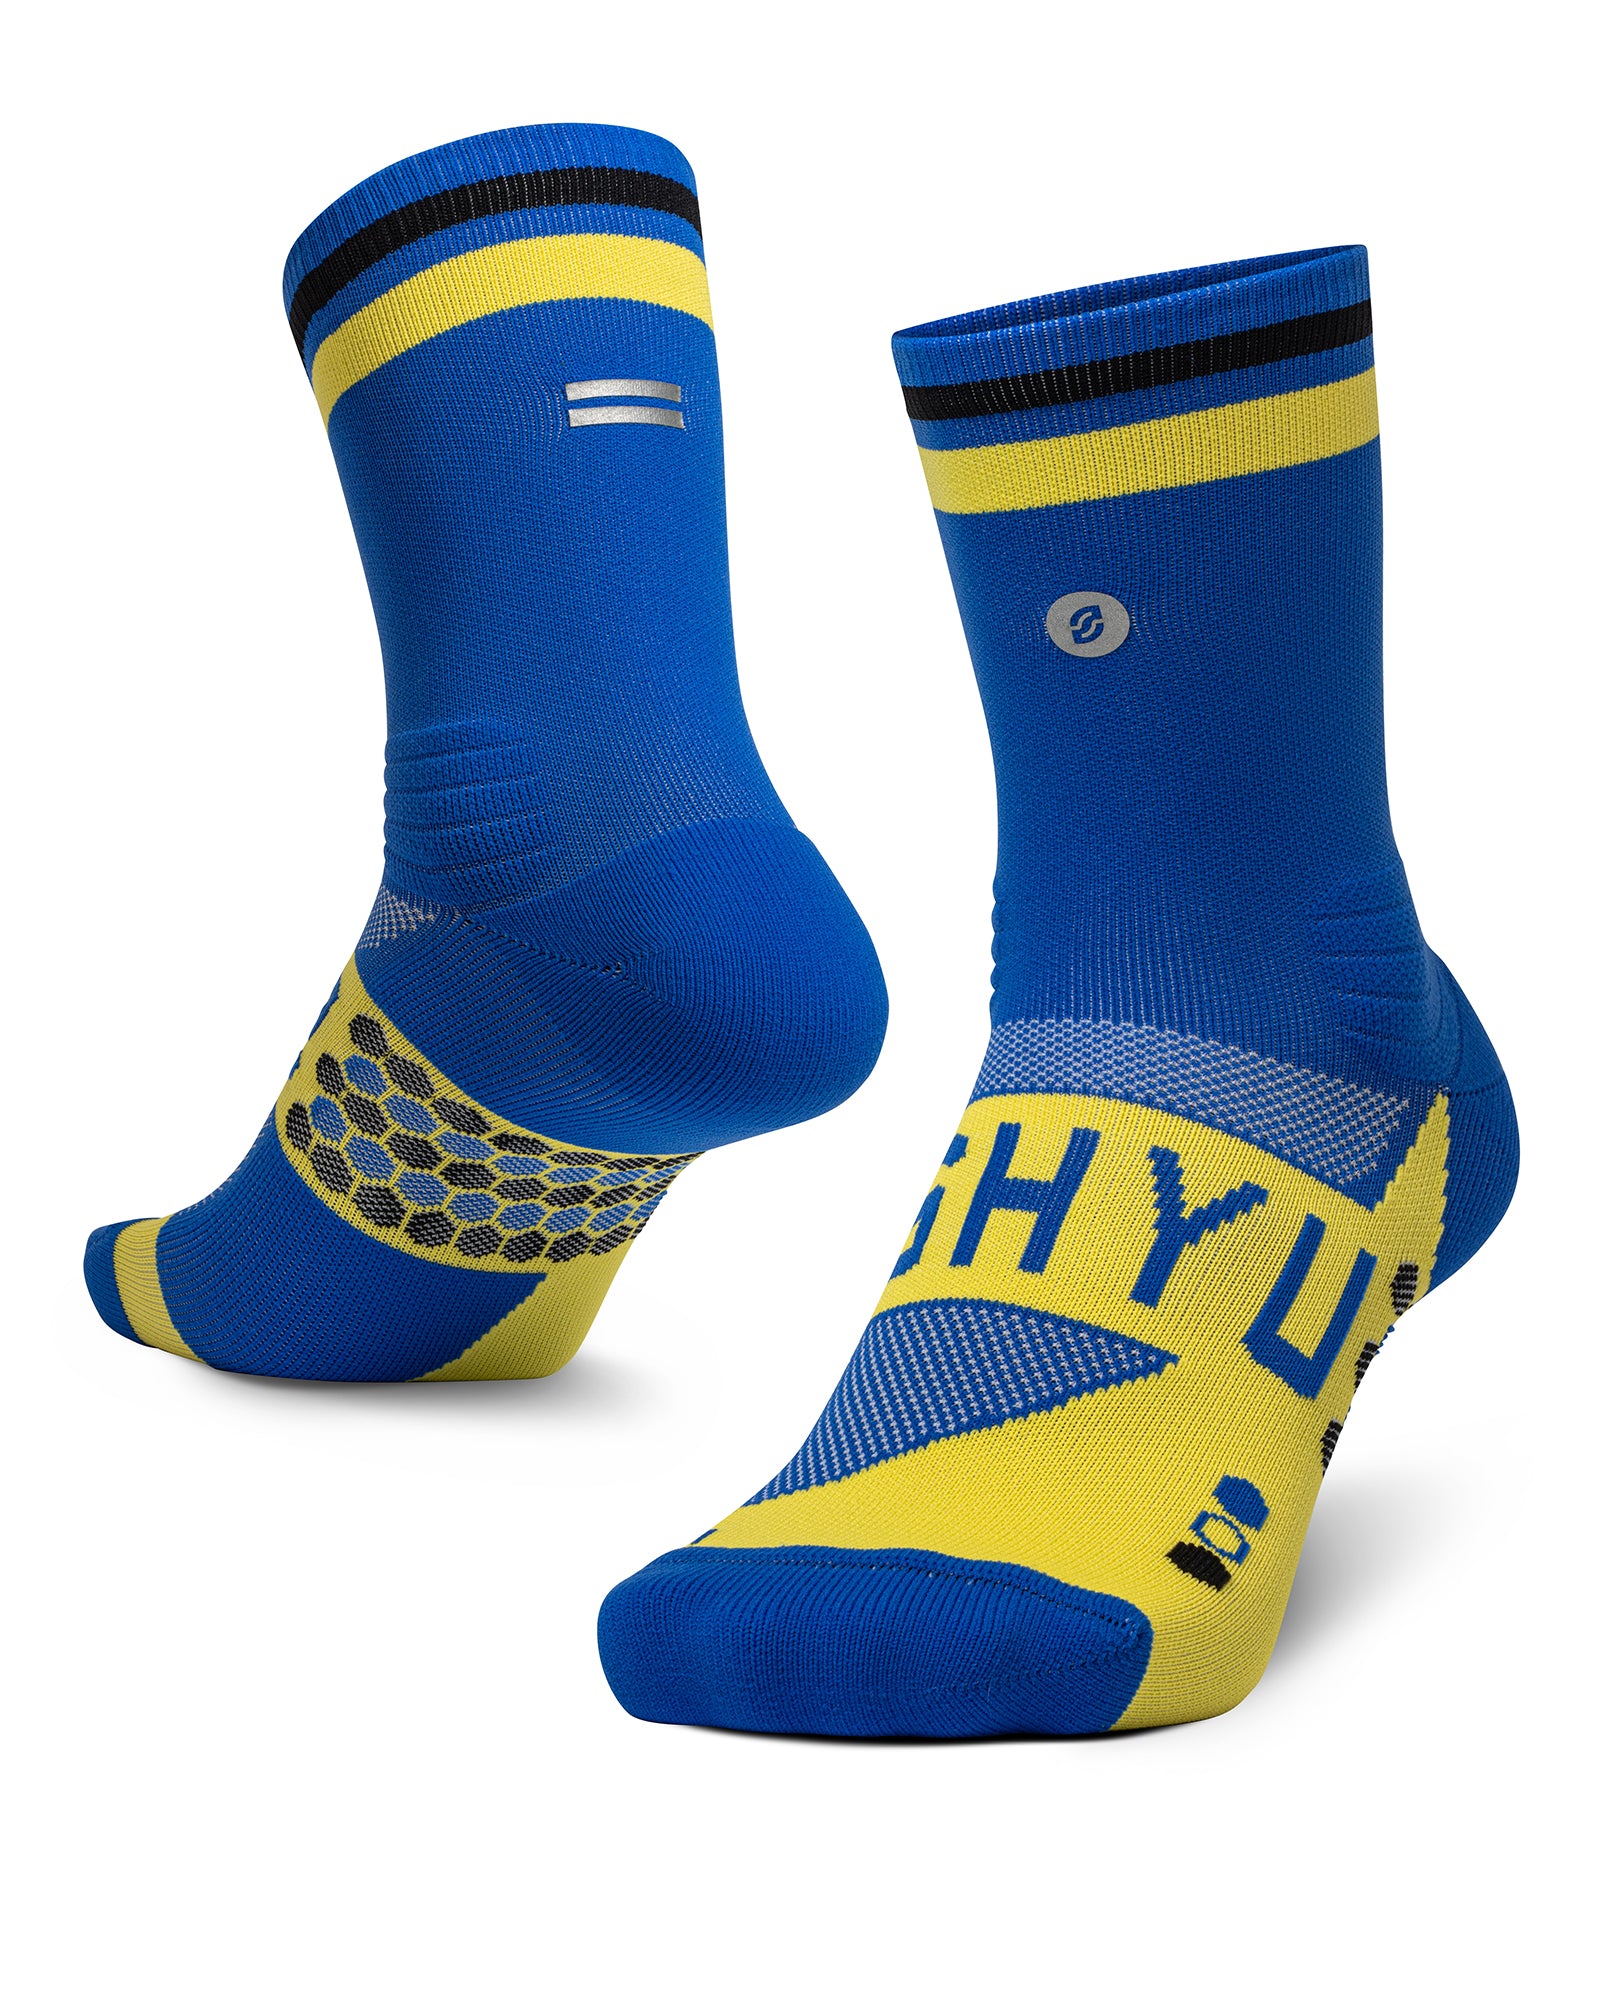 SHYU racing socks - blue | yellow | black